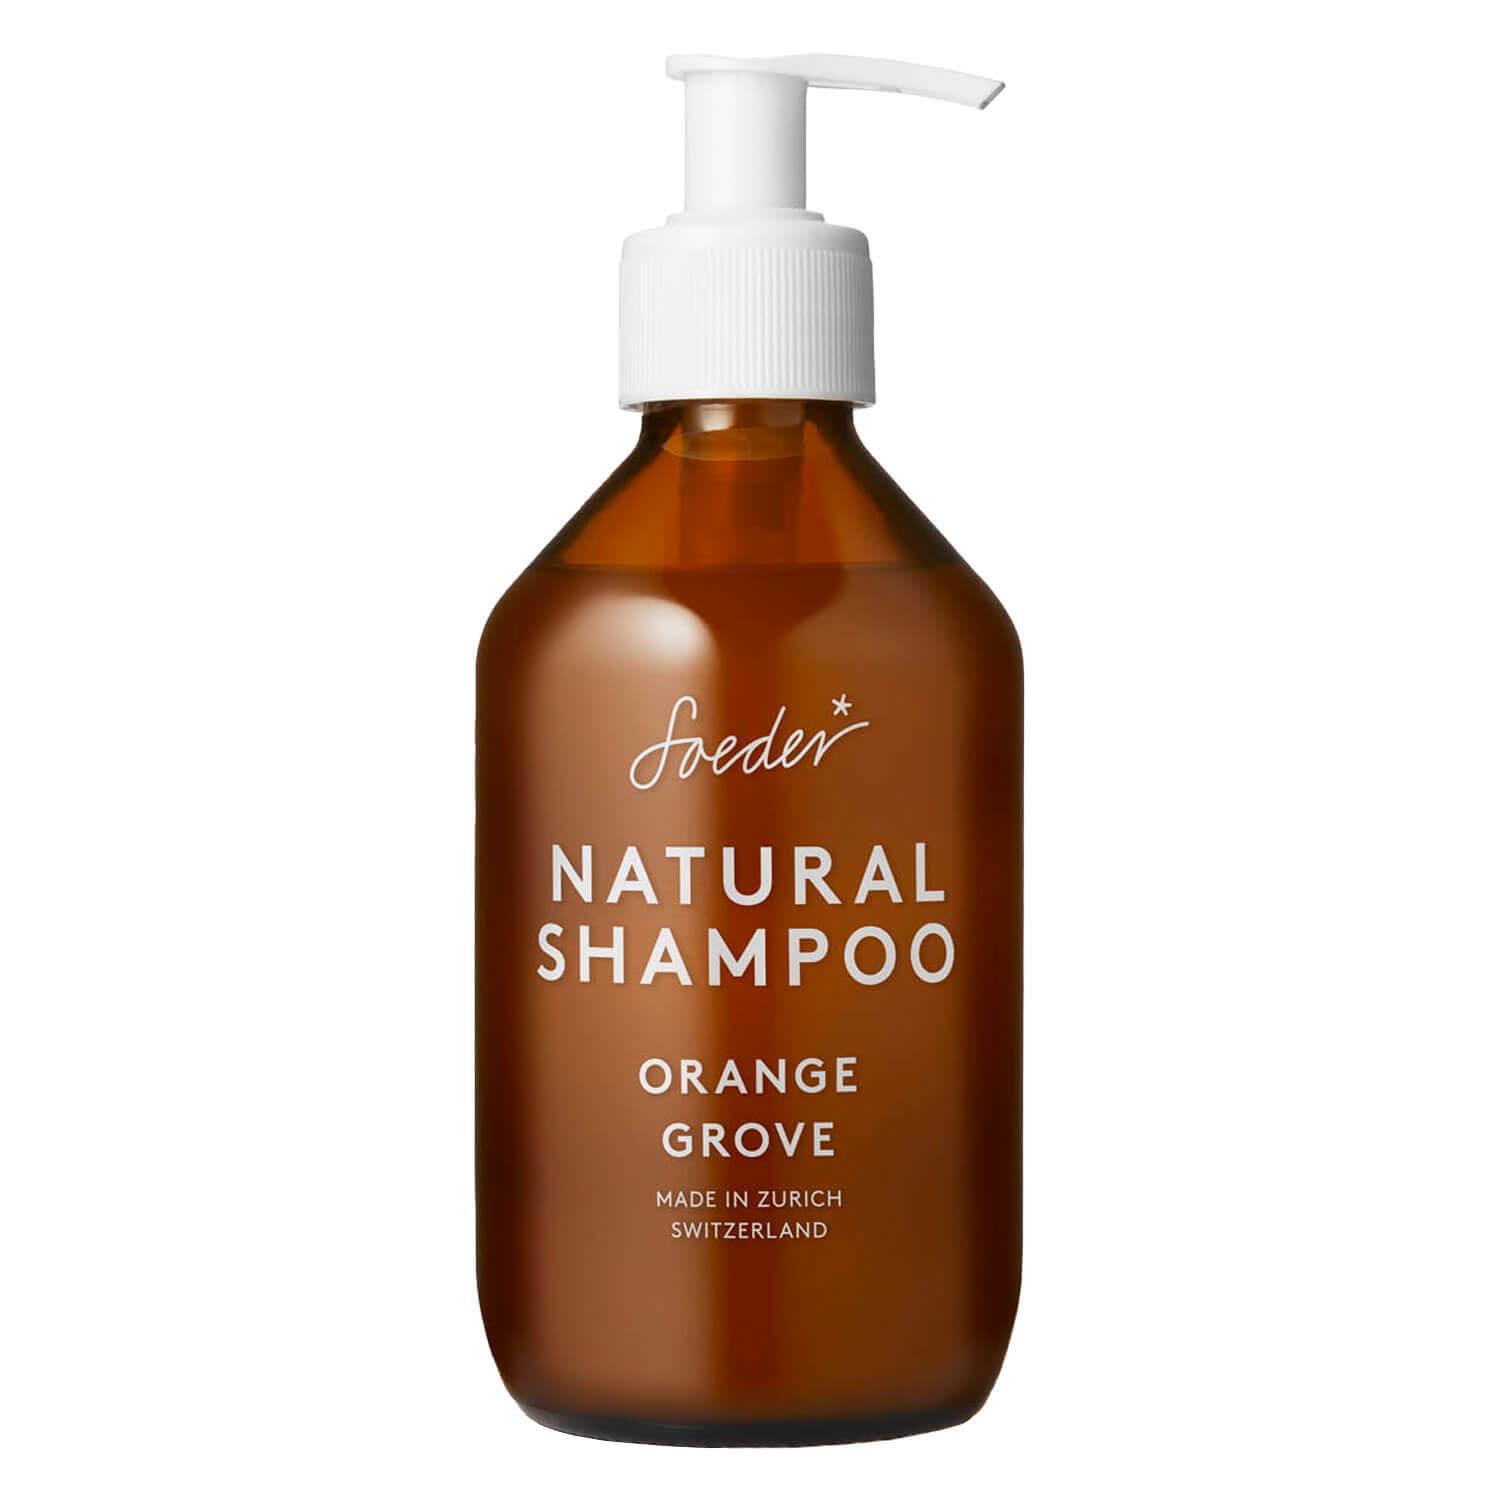 Soeder - Natural Shampoo Orange Grove